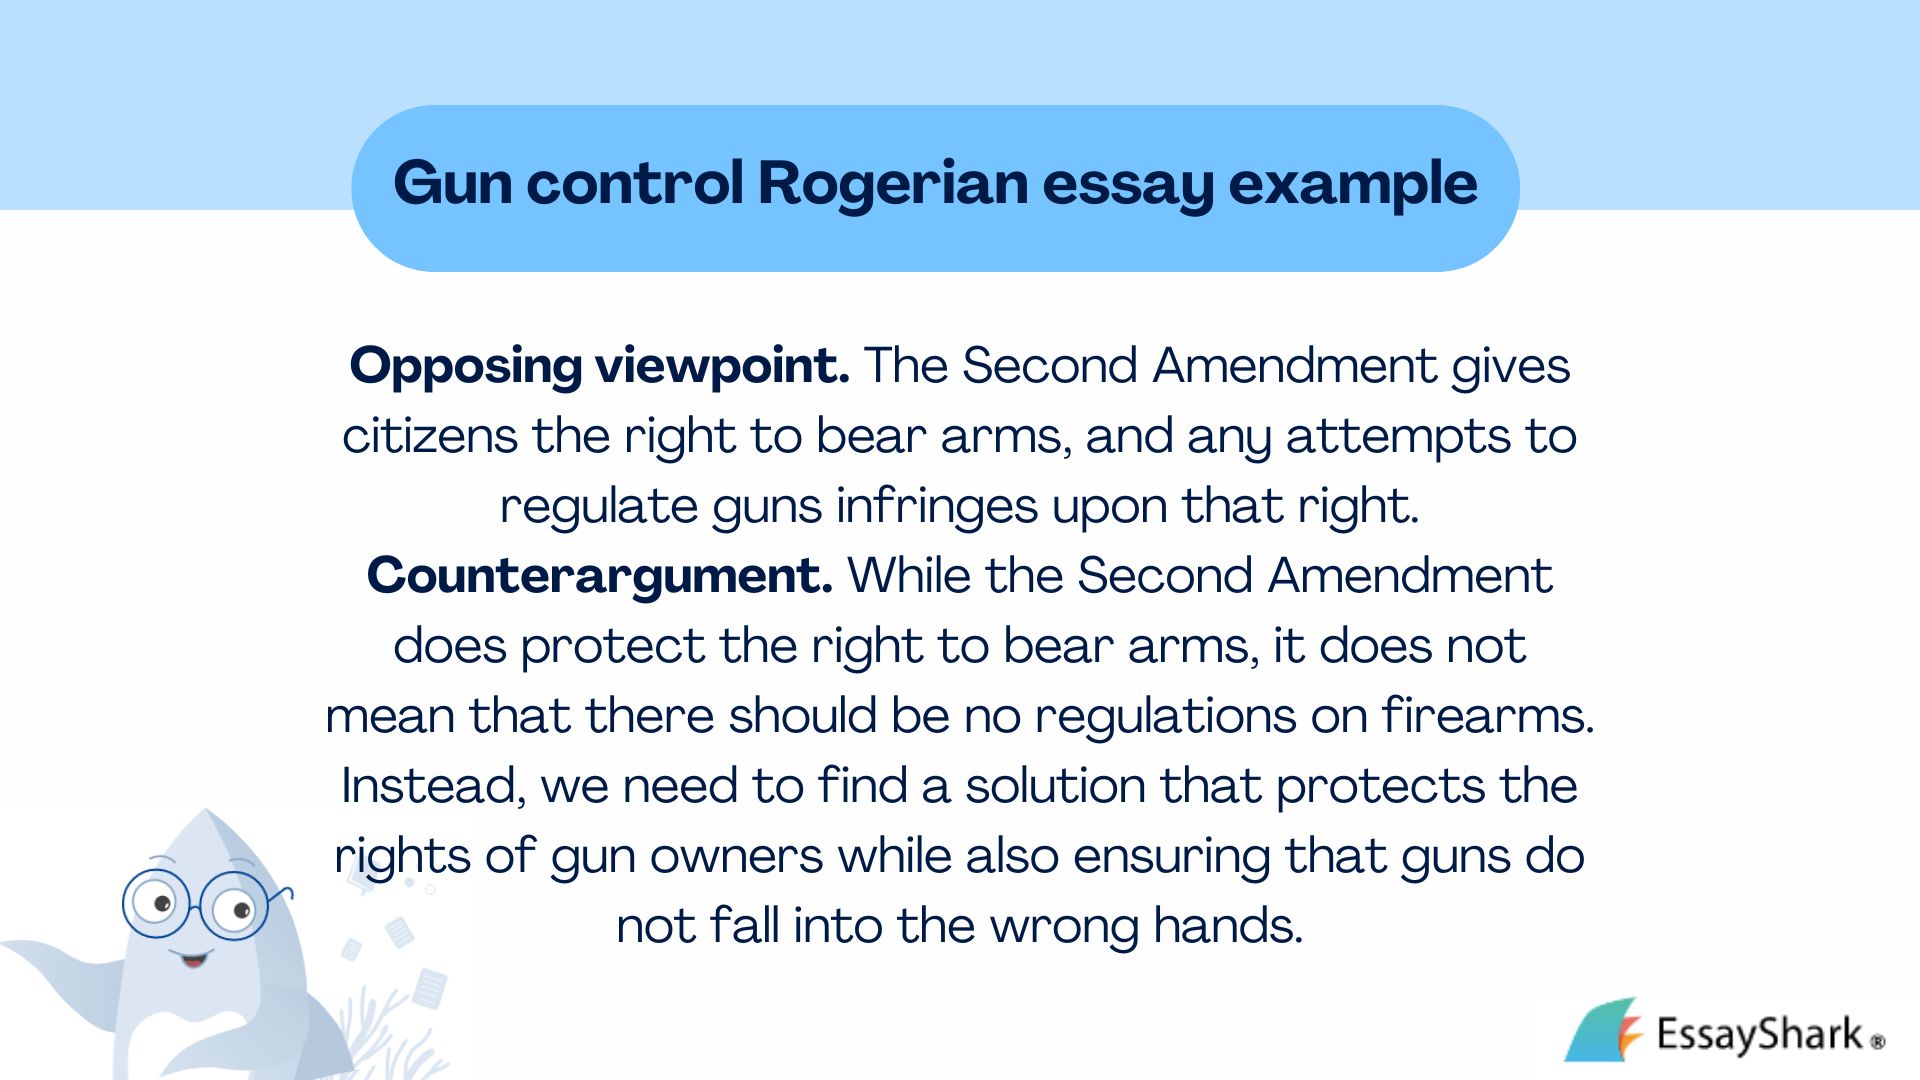 Gun control Rogerian essay example